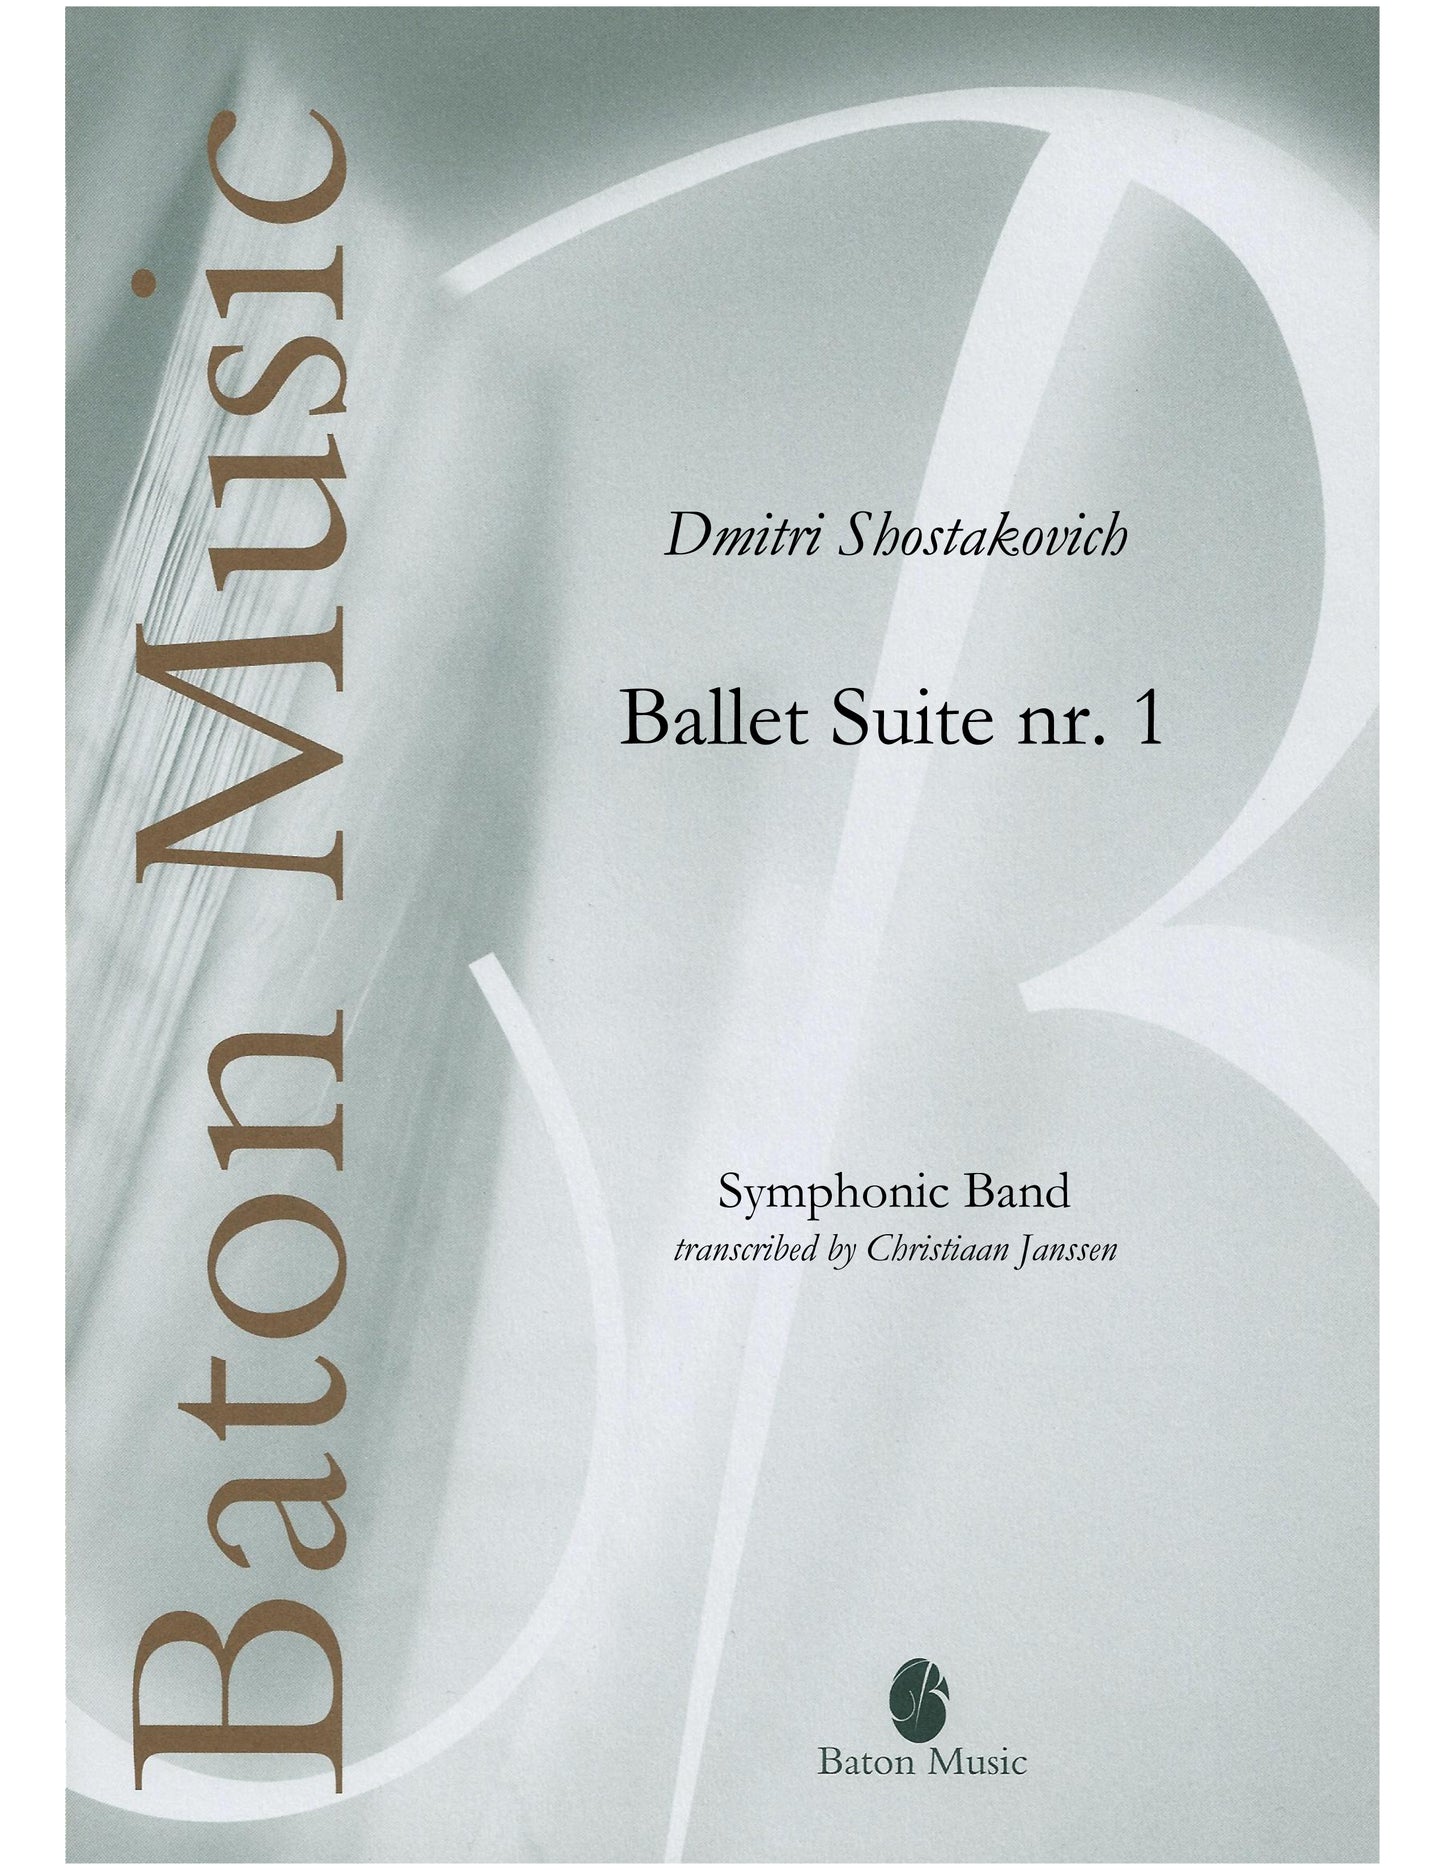 Ballet Suite No. 1 - Dmitri Shostakovich